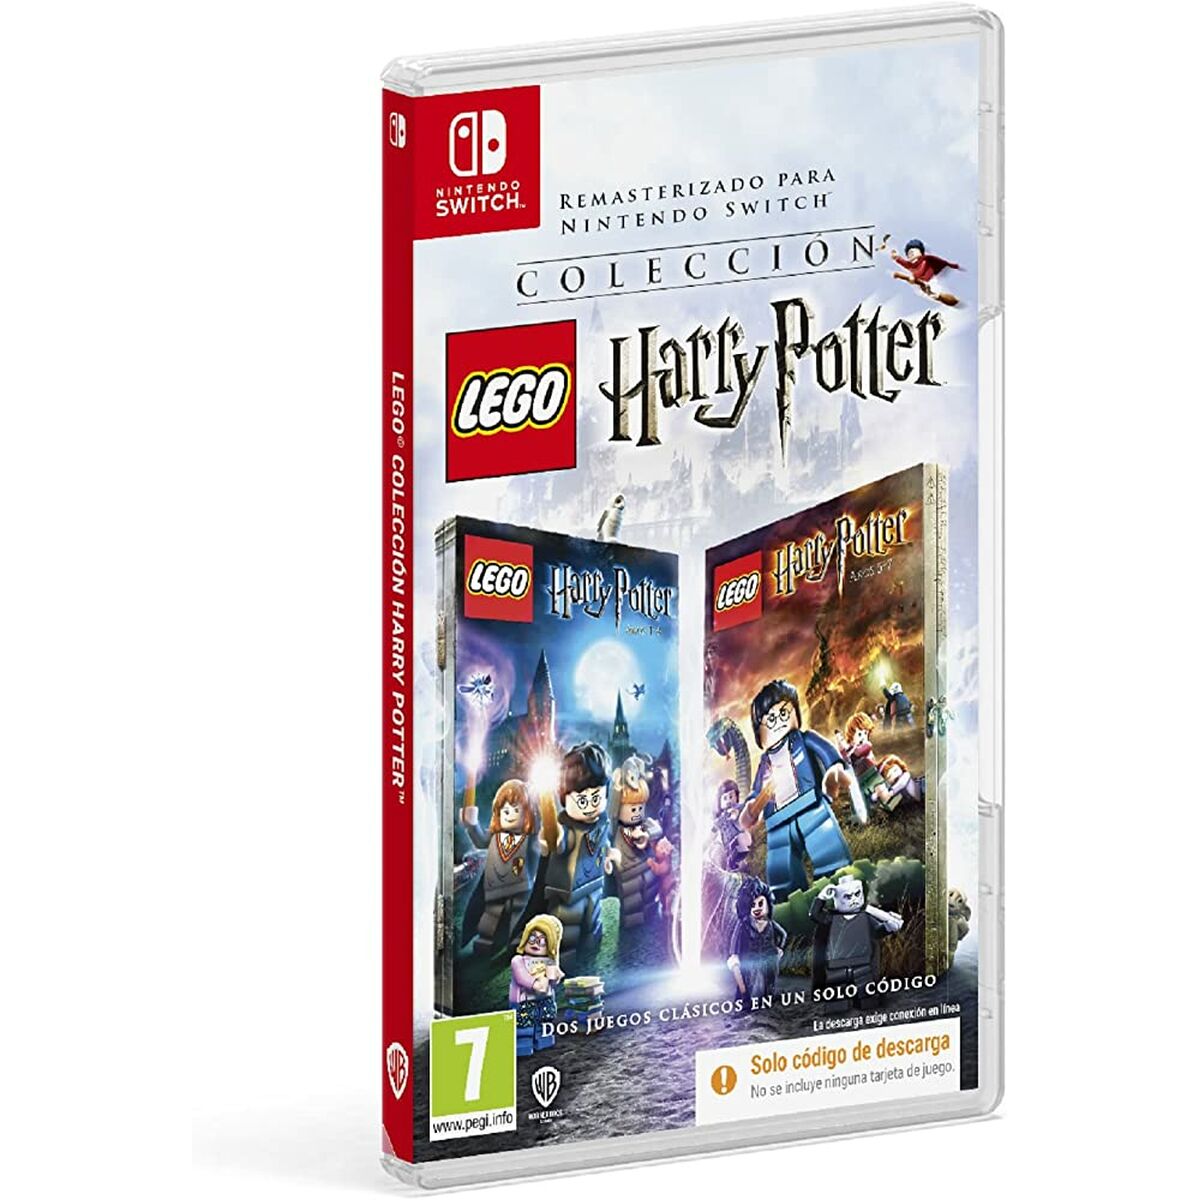 Jeu vidéo pour Switch Warner Games Lego Harry Potter Collection